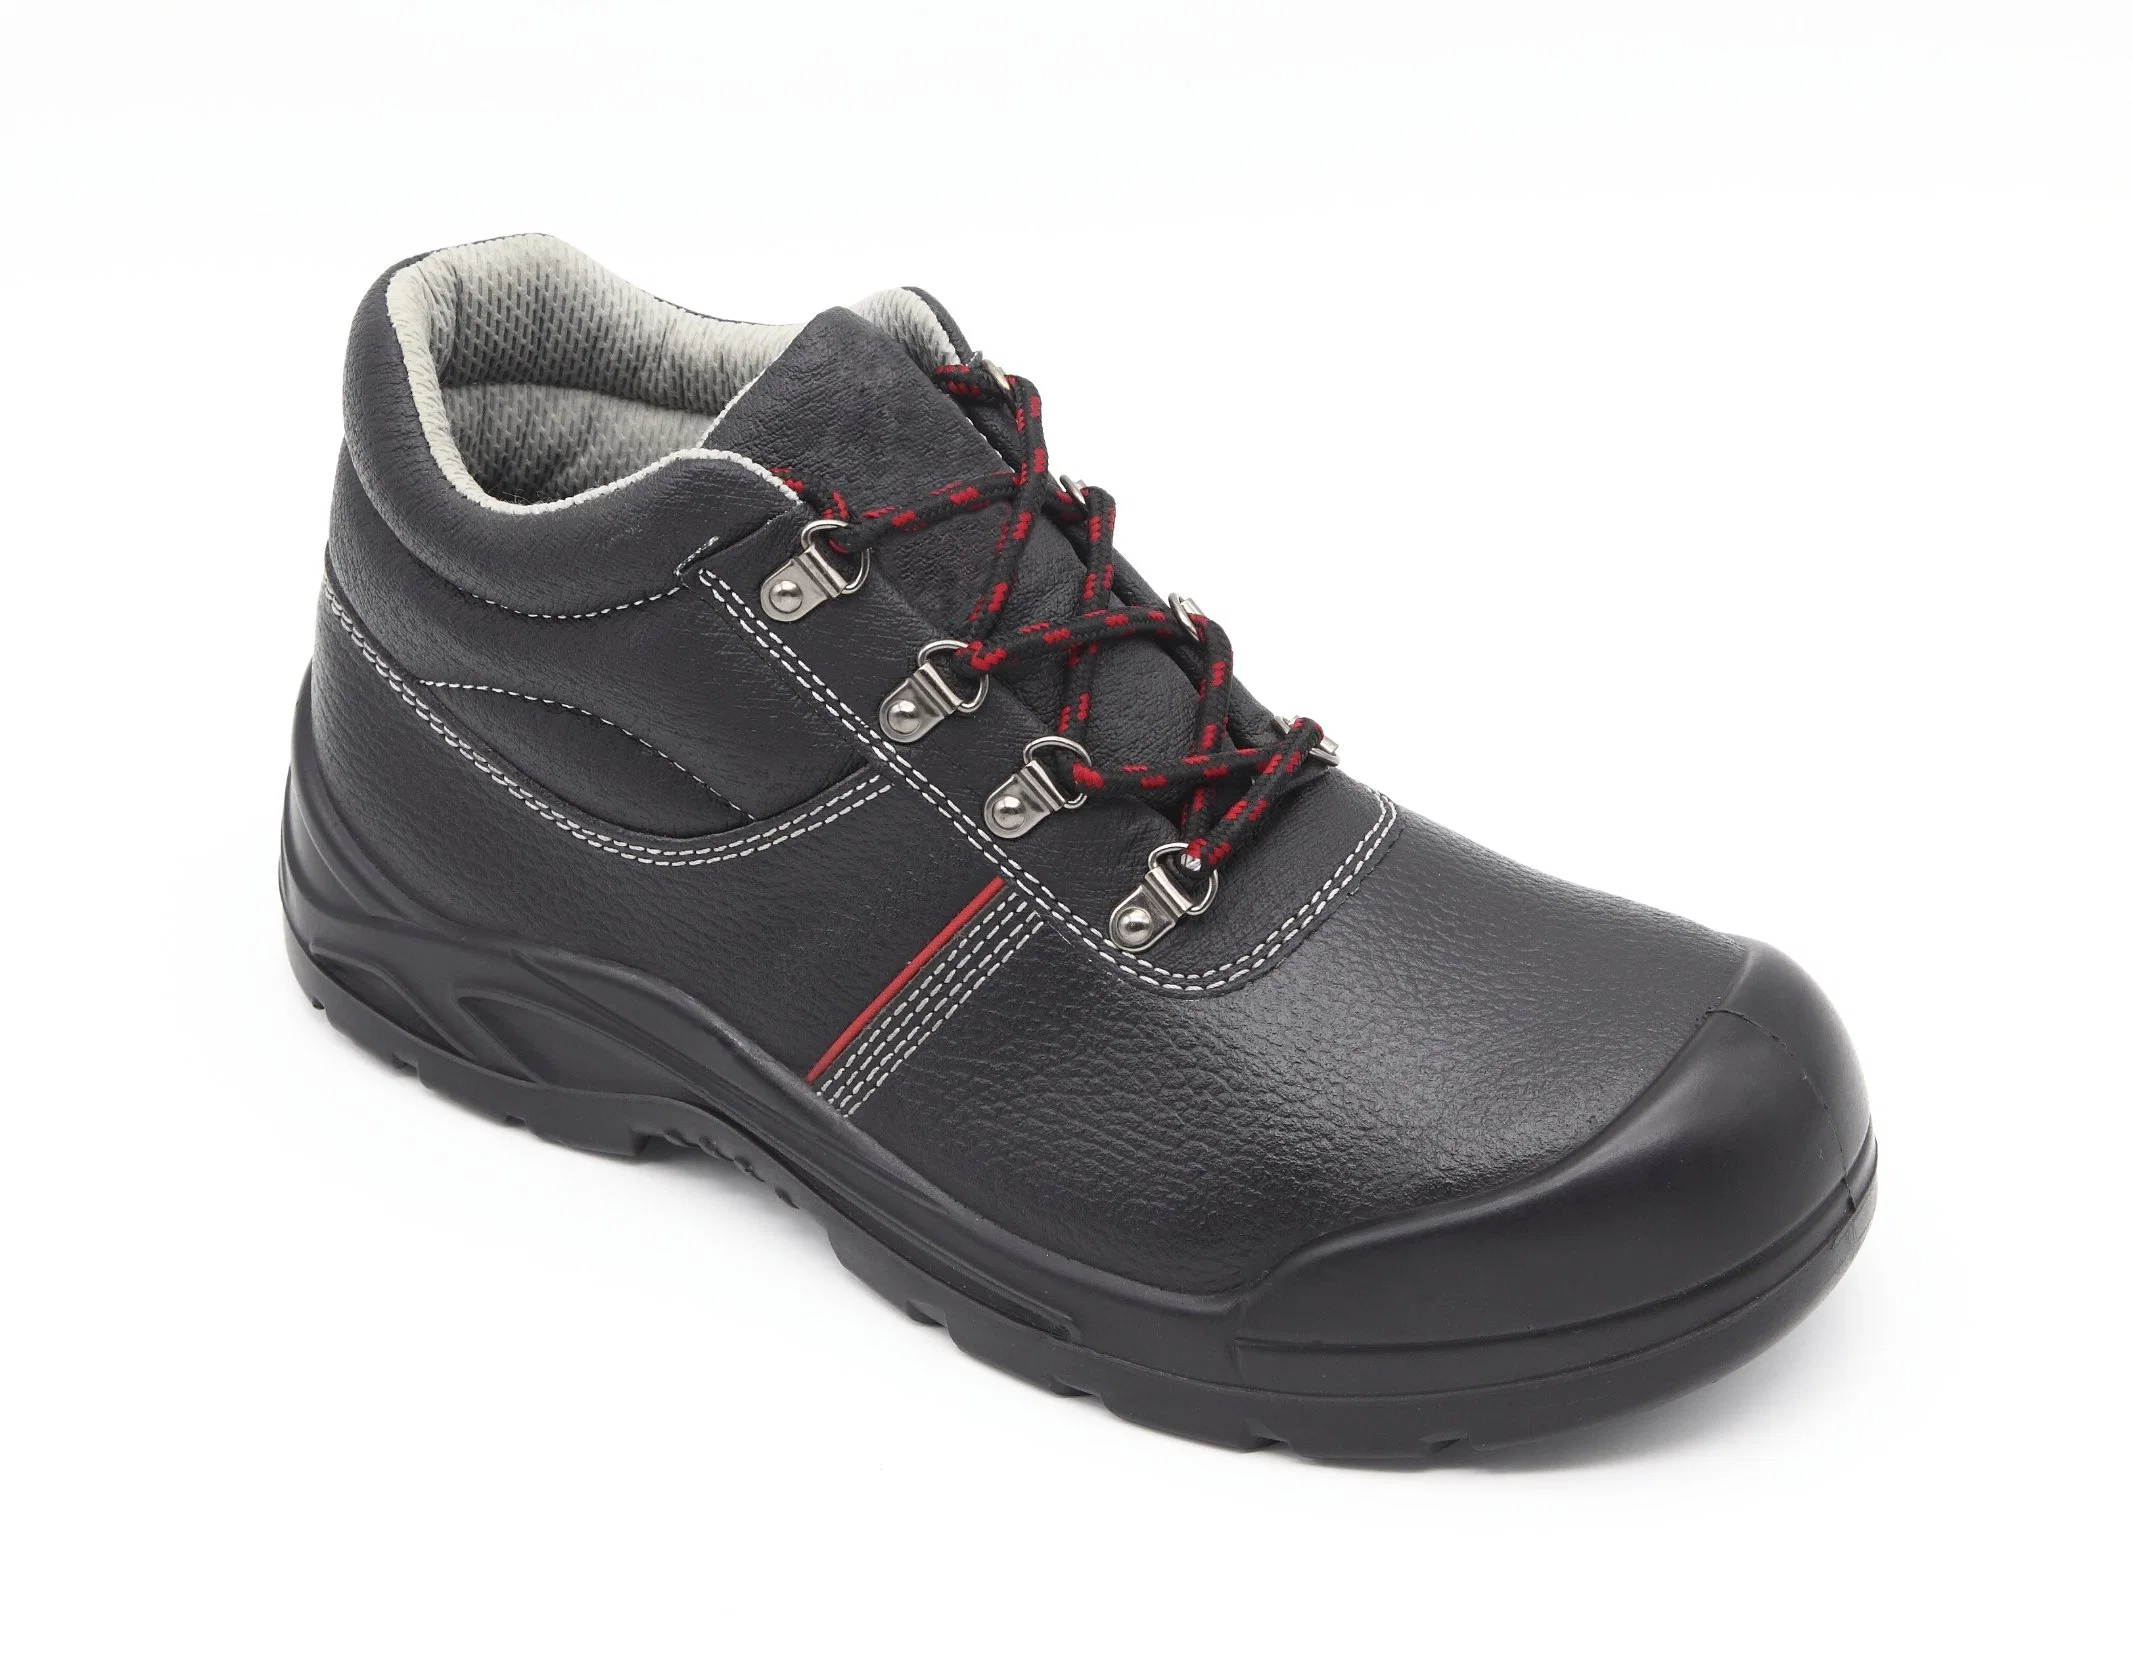 Men's Outdoor Comfortable Safe Factory Work Shoes